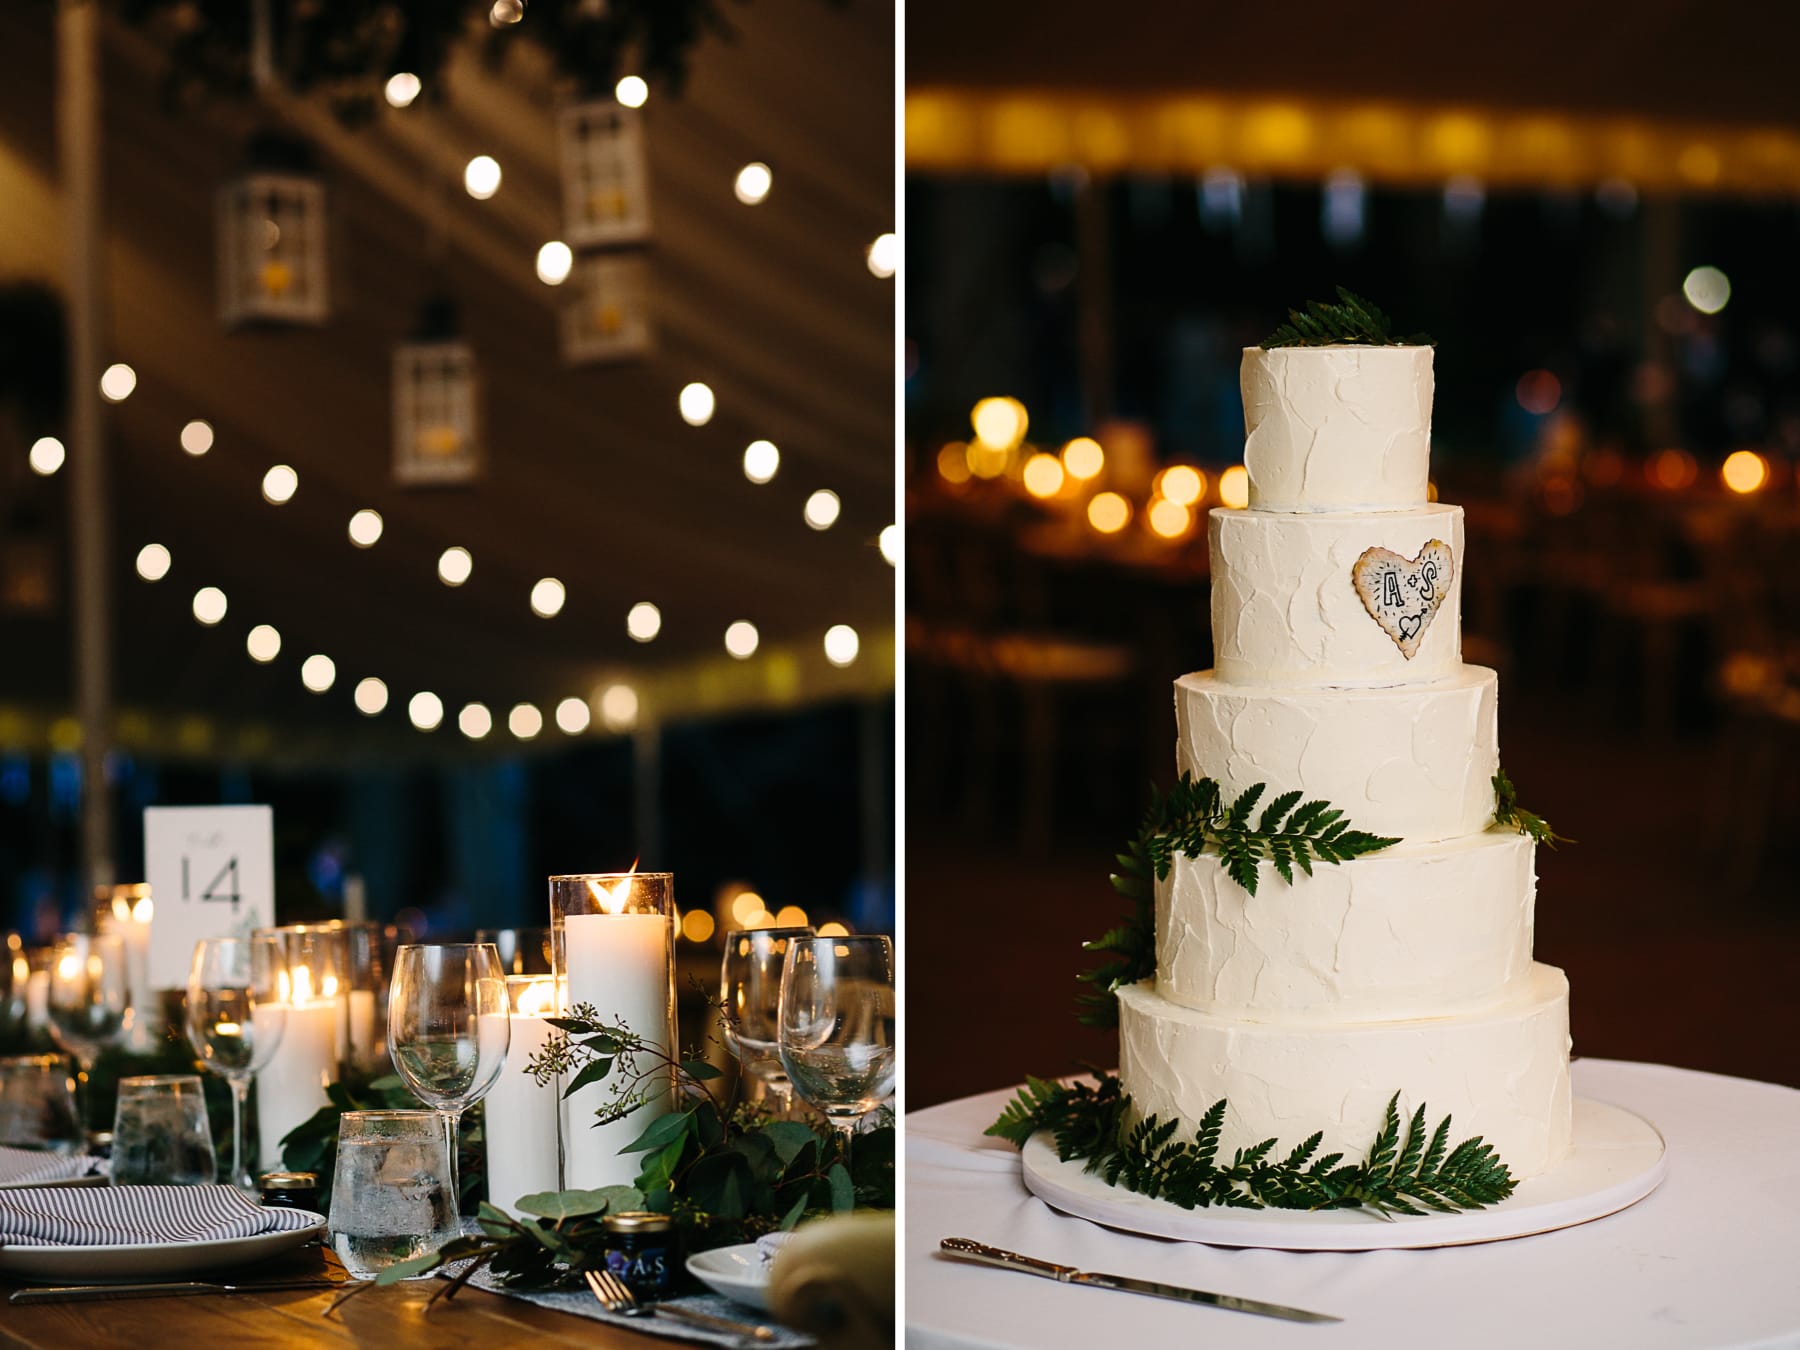 reception details at a Commander's Mansion wedding | Kelly Benvenuto Photography